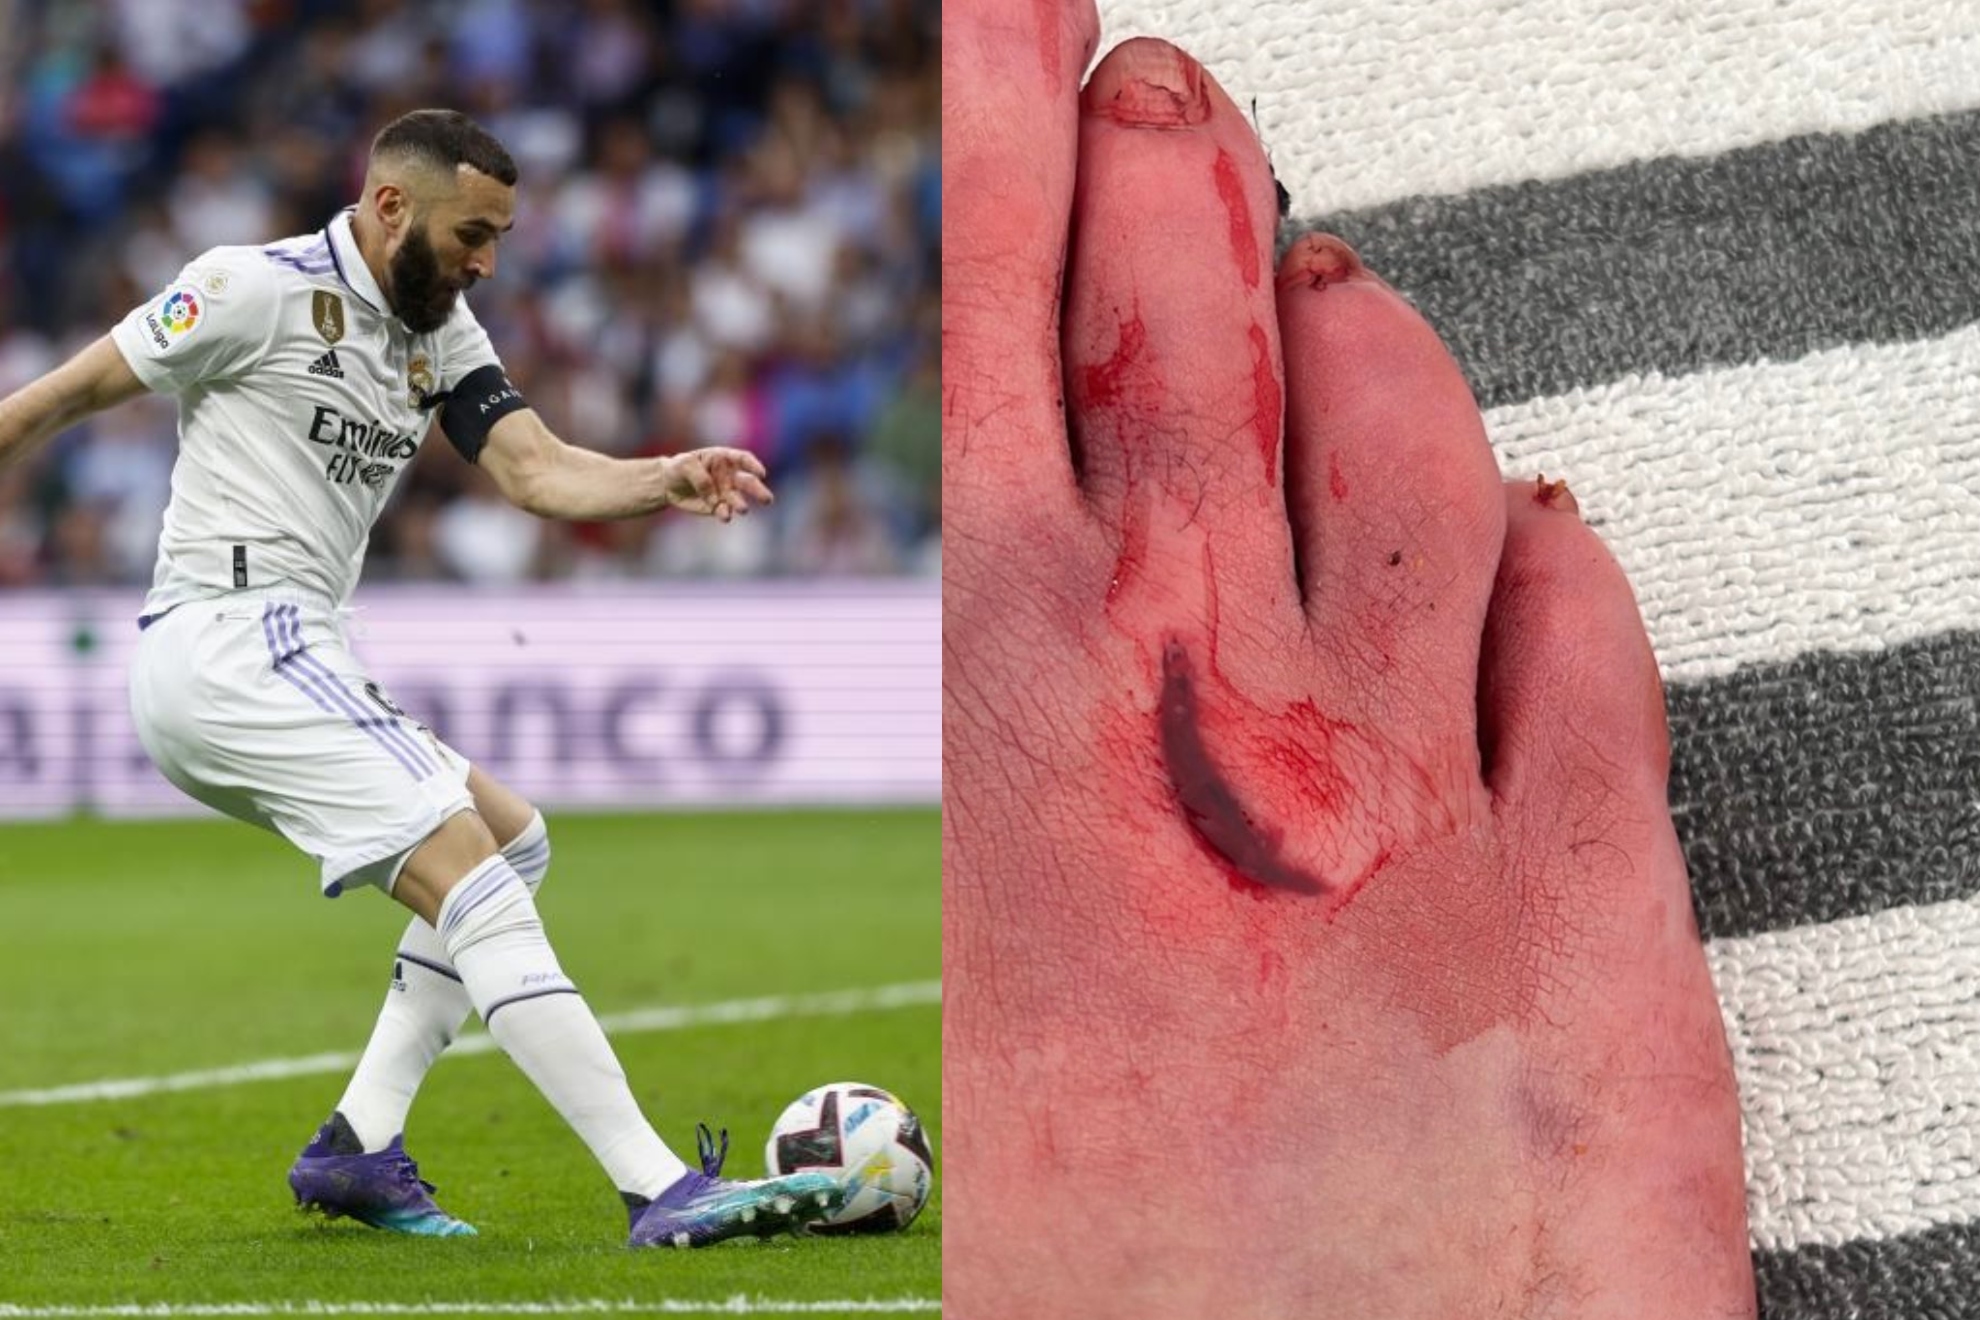 La herida de Karim Benzema